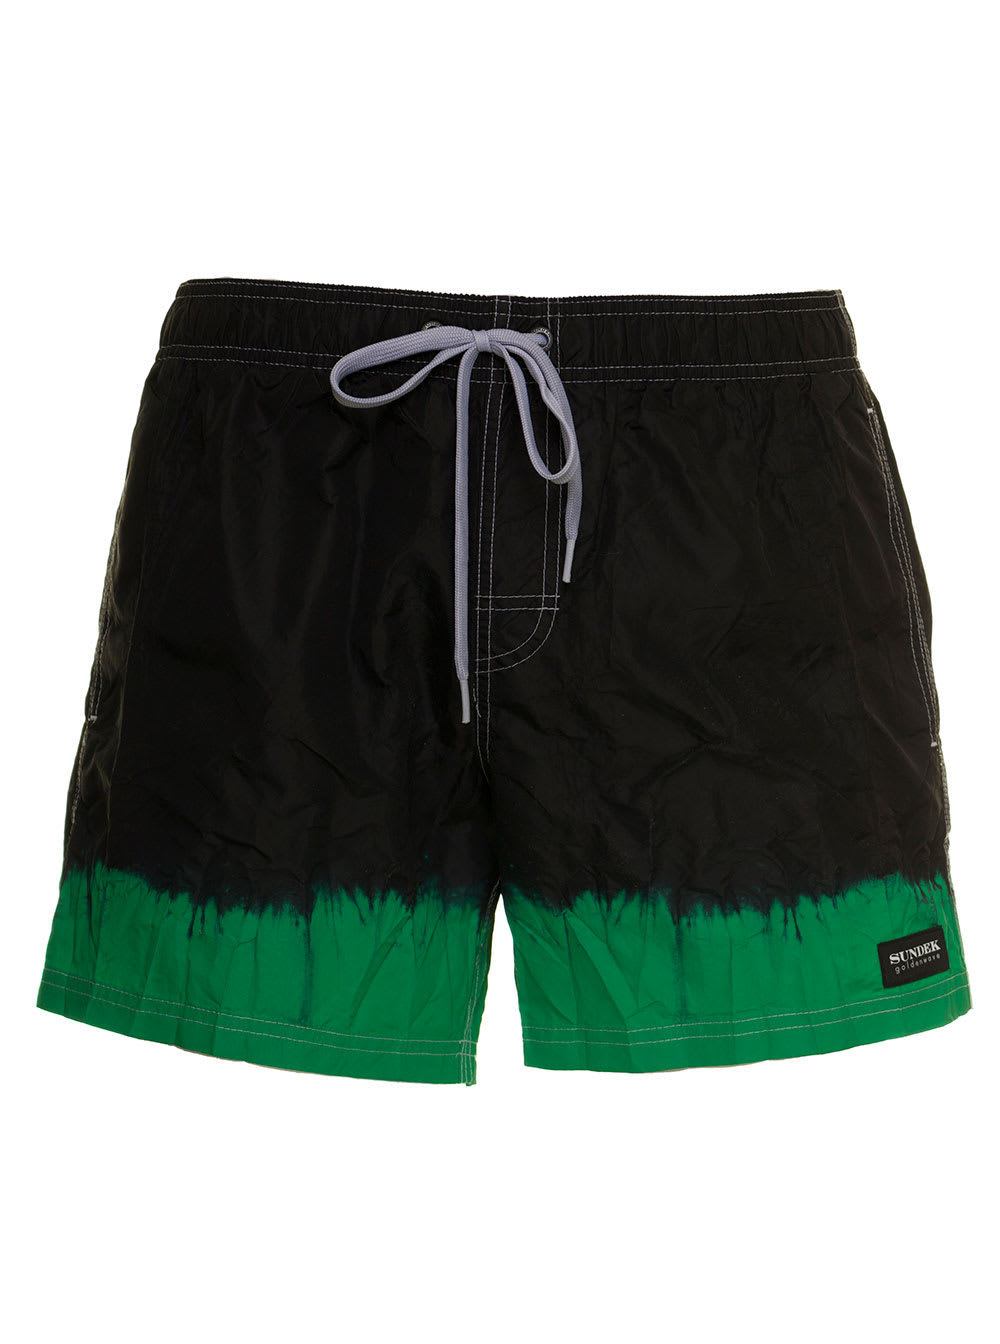 Sundek Mens Bicolor Tie Dye Nylon Beach Shorts